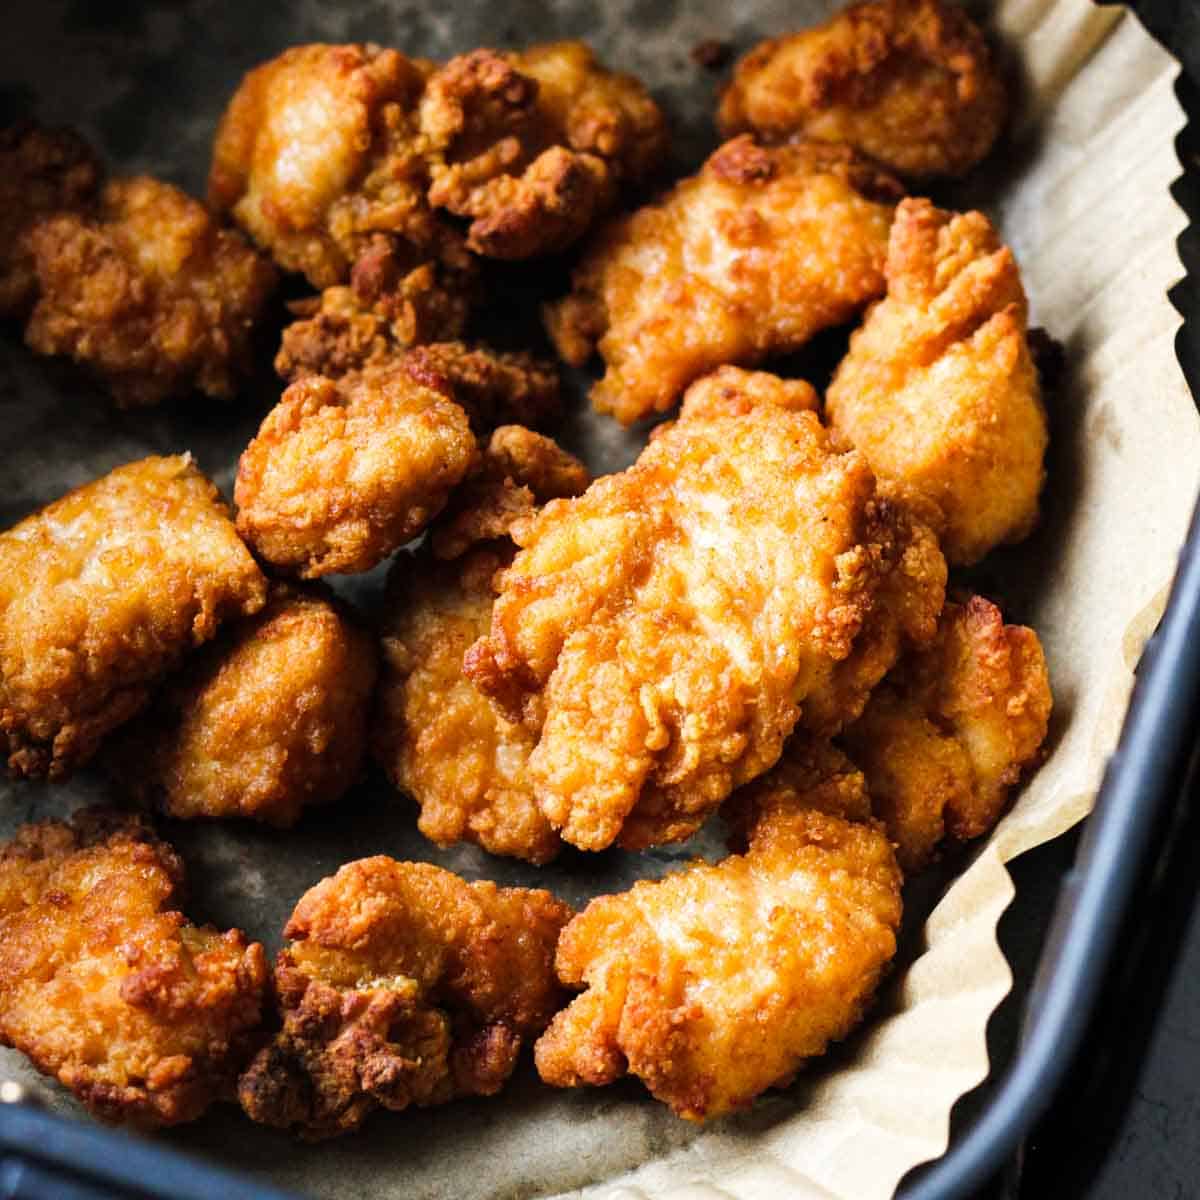 Do Costco's Just Bare Frozen Chicken Nuggets Taste Like Chick-Fil-a?